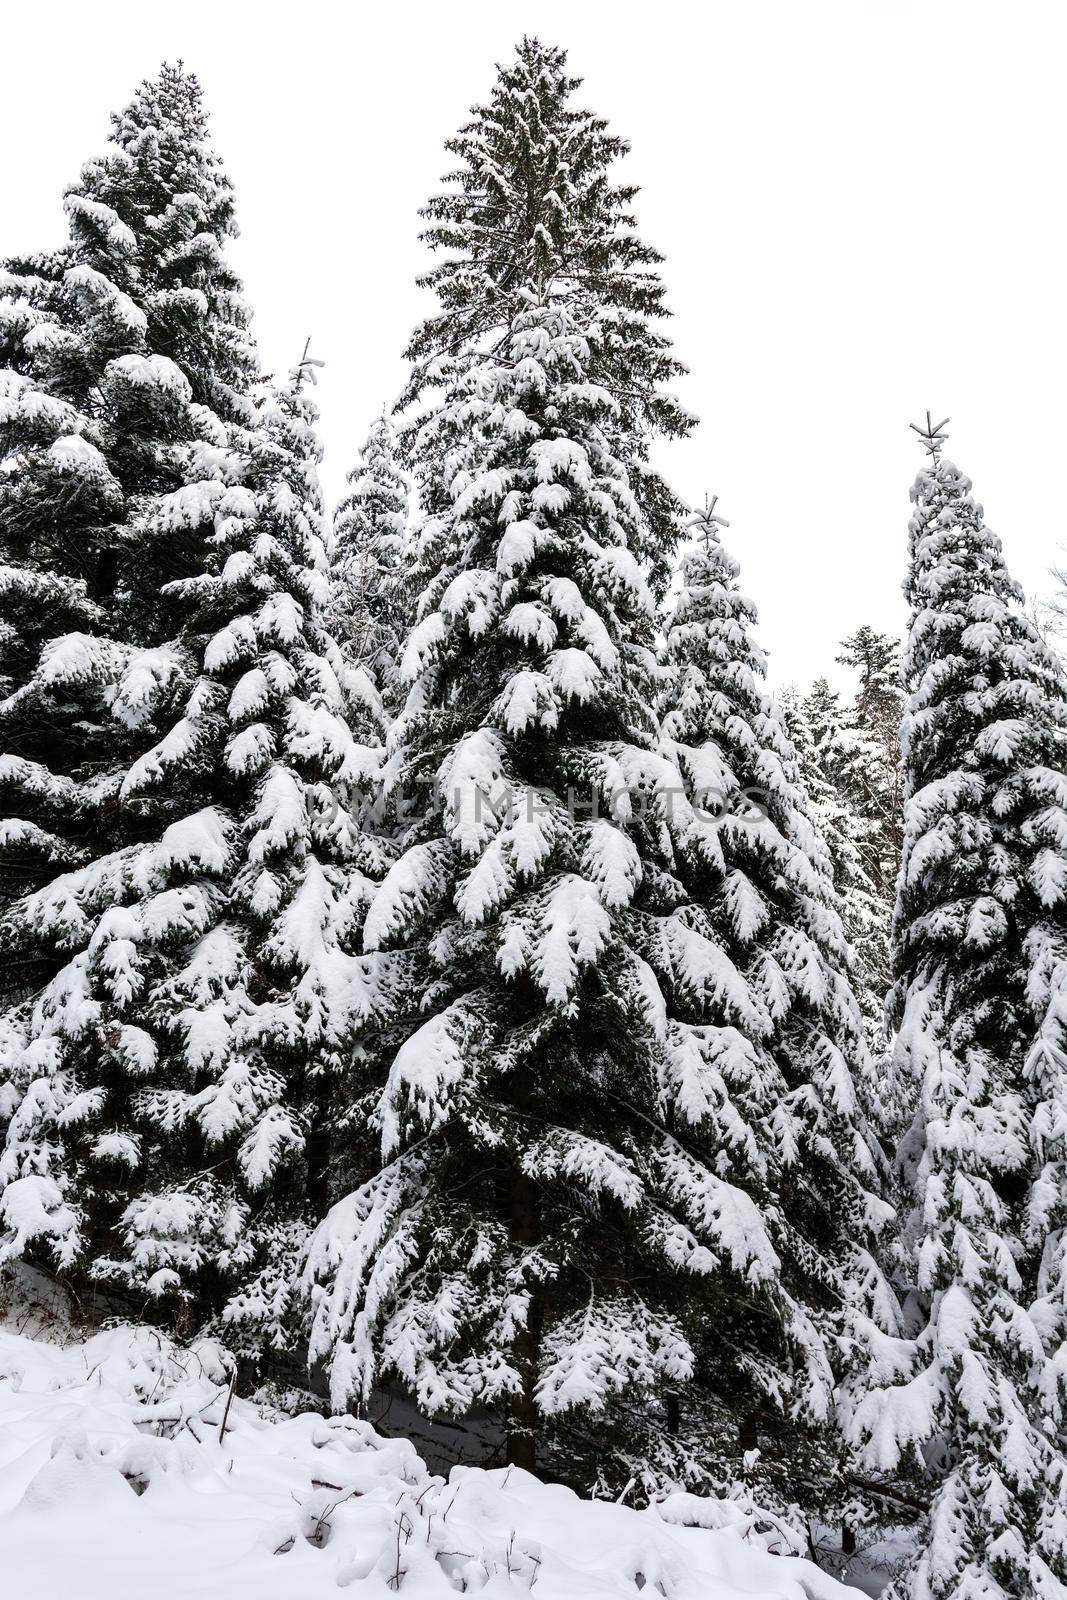 Spruce trees in winter by wdnet_studio